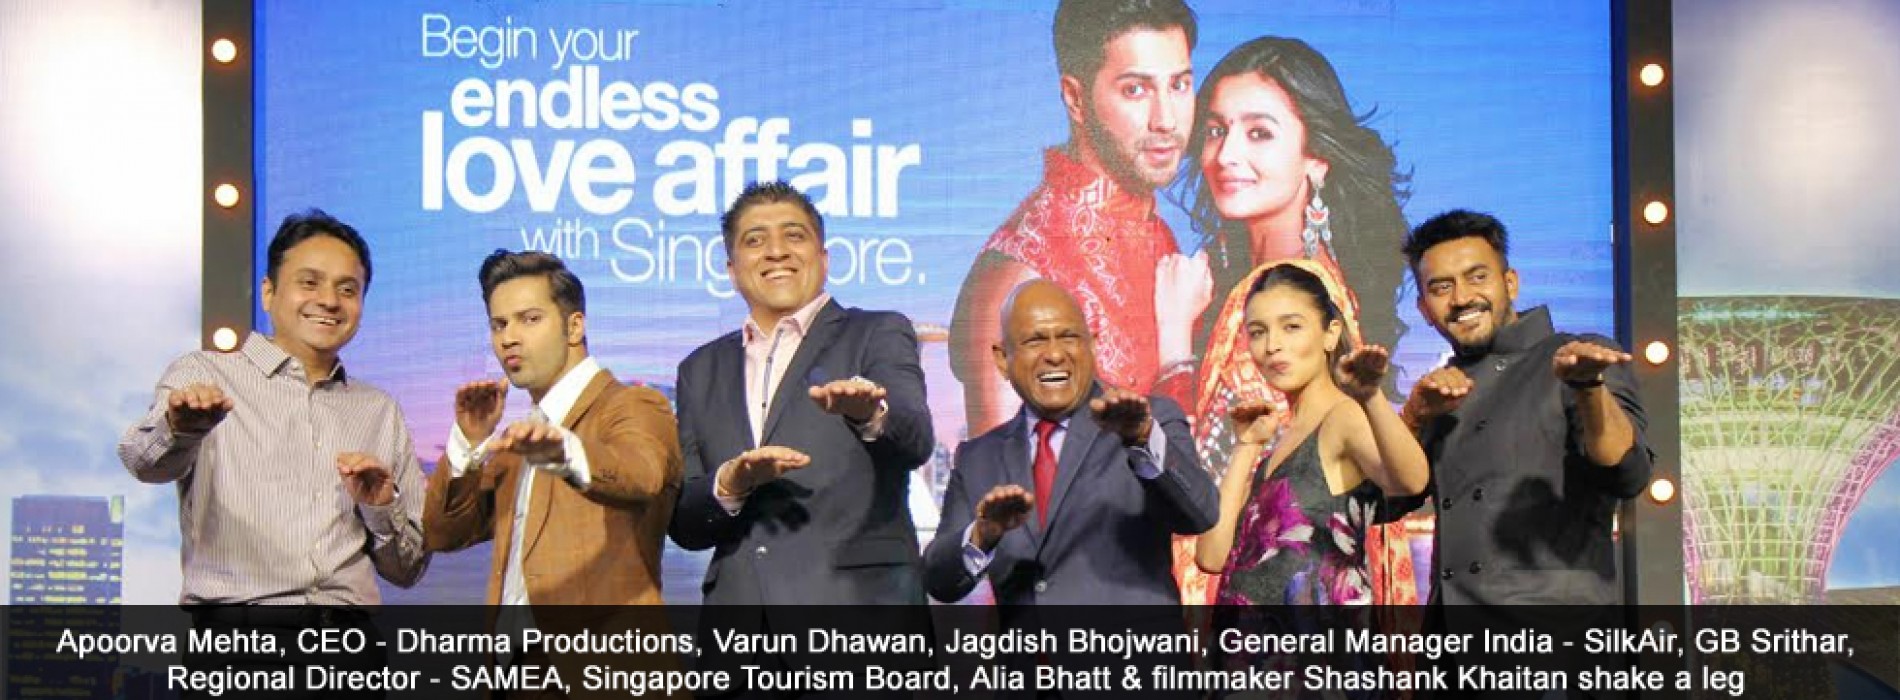 Badrinath and his Dulhania celebrate their endless love affair with Singapore and SilkAir